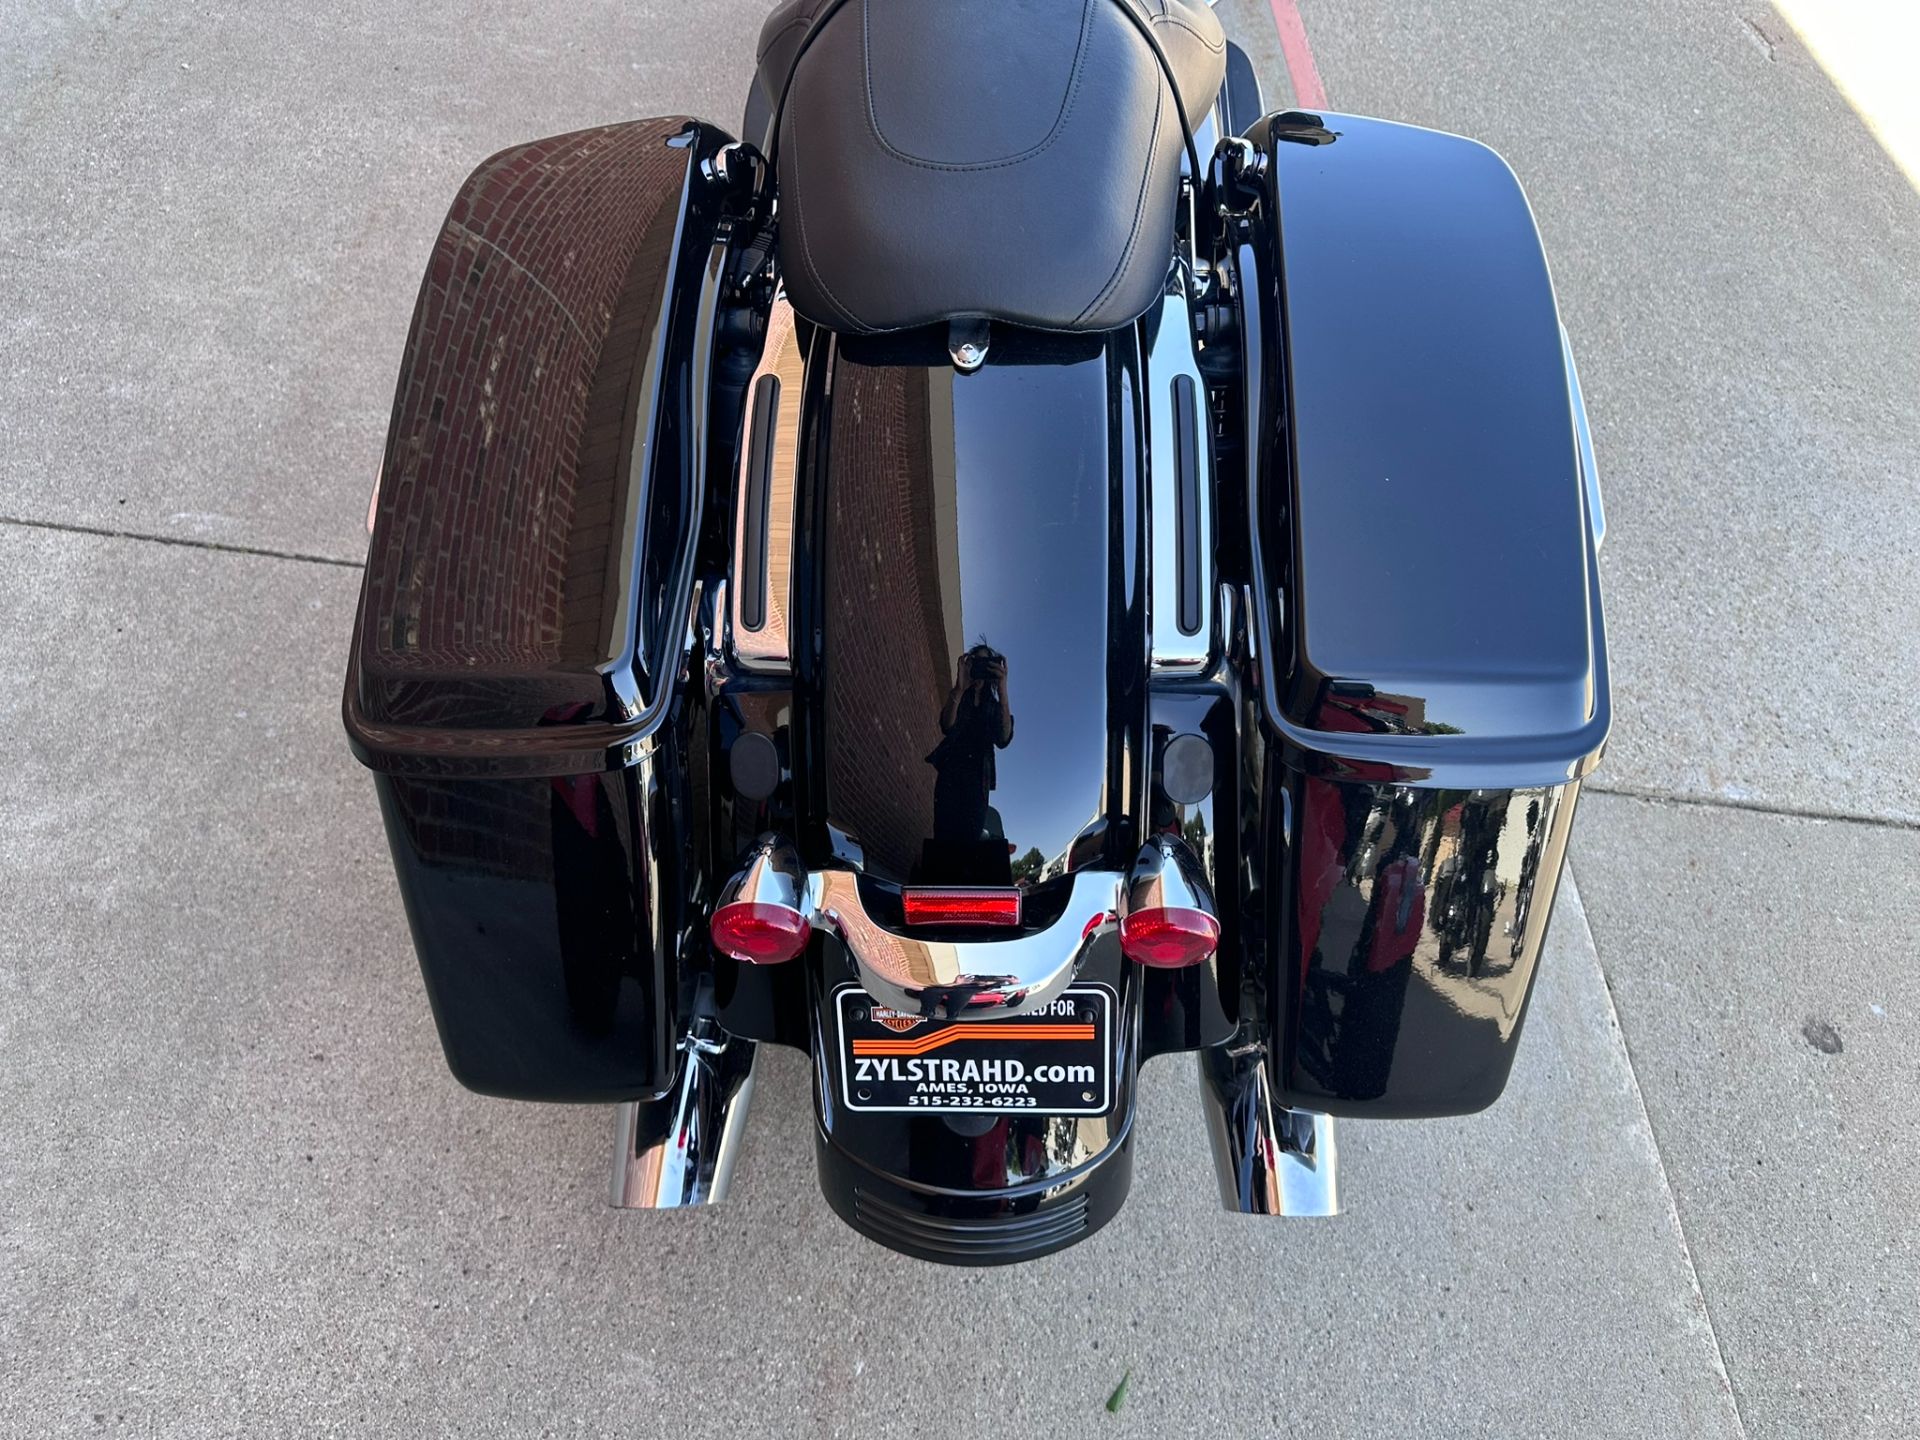 2020 Harley-Davidson Street Glide® in Ames, Iowa - Photo 14